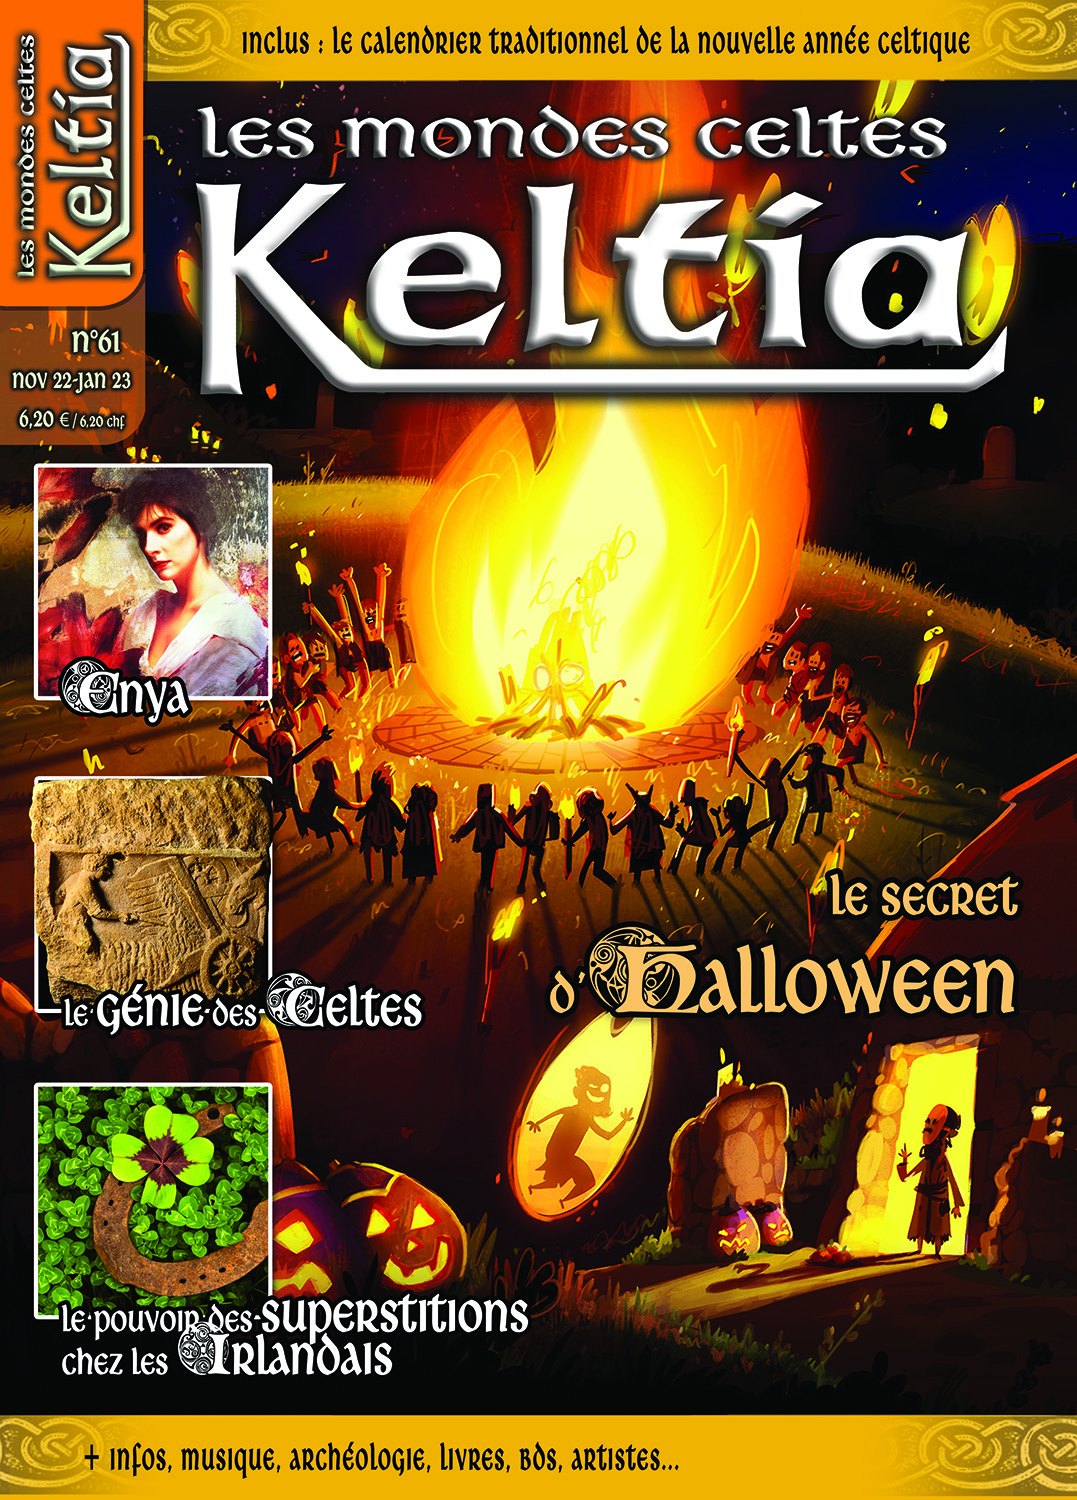 Keltia magazine n61